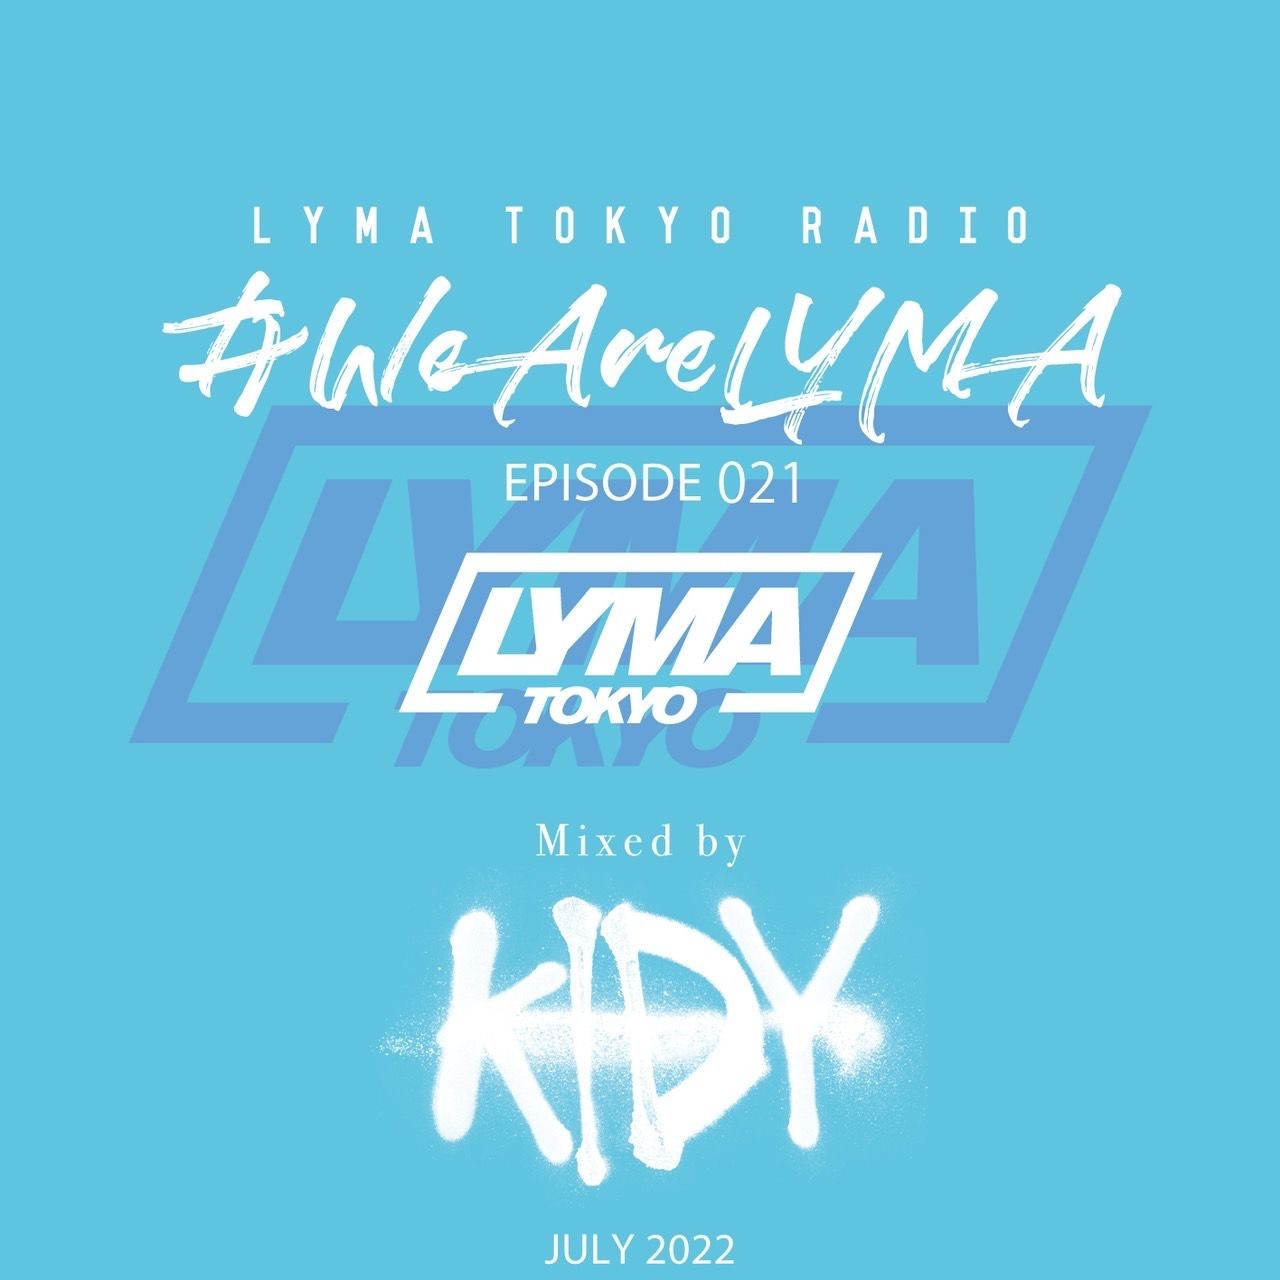 KIDY - Mix for LYMA